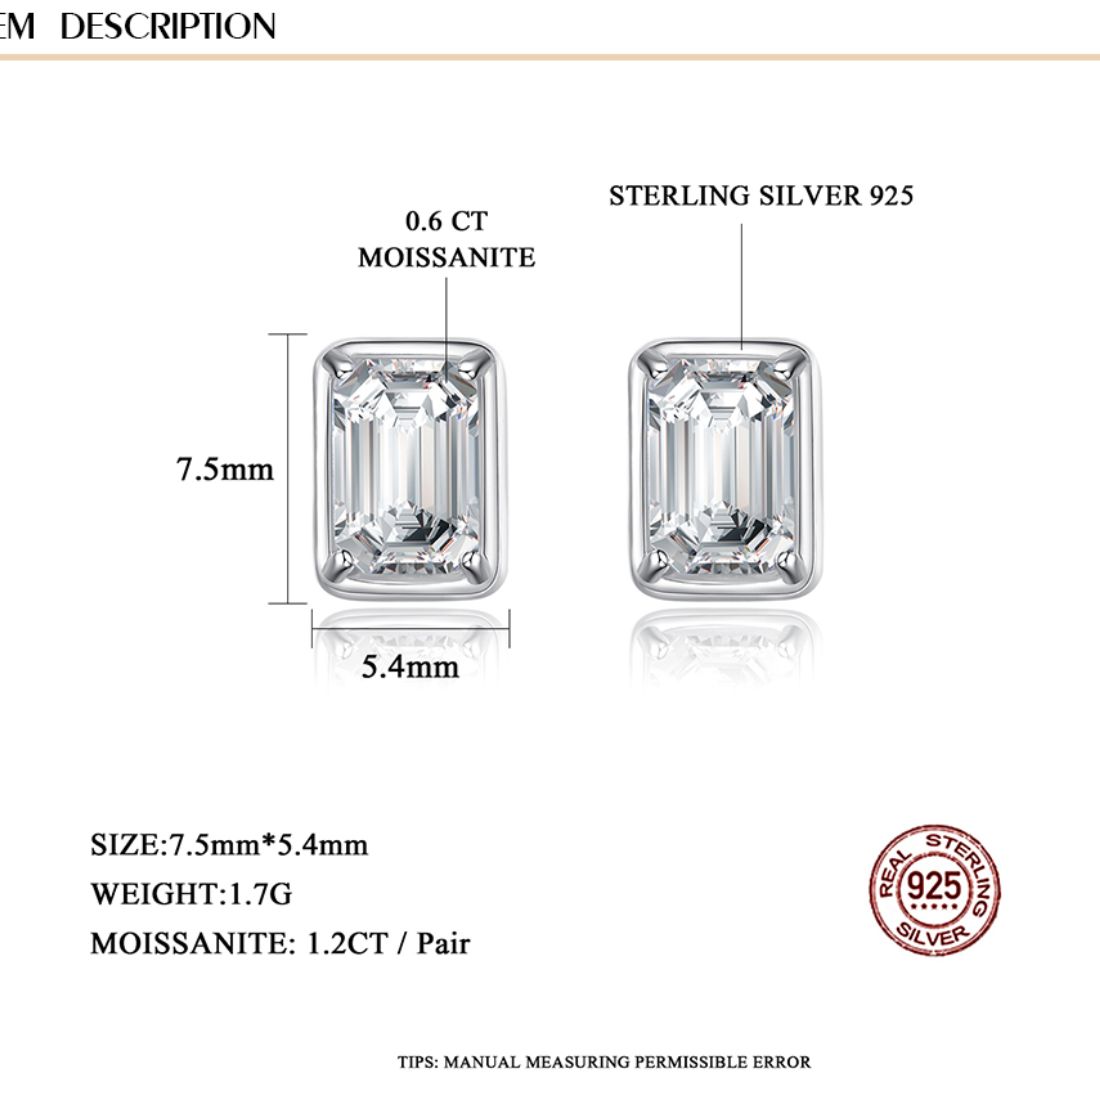 S925 Sterling Silver Stud Earrings details